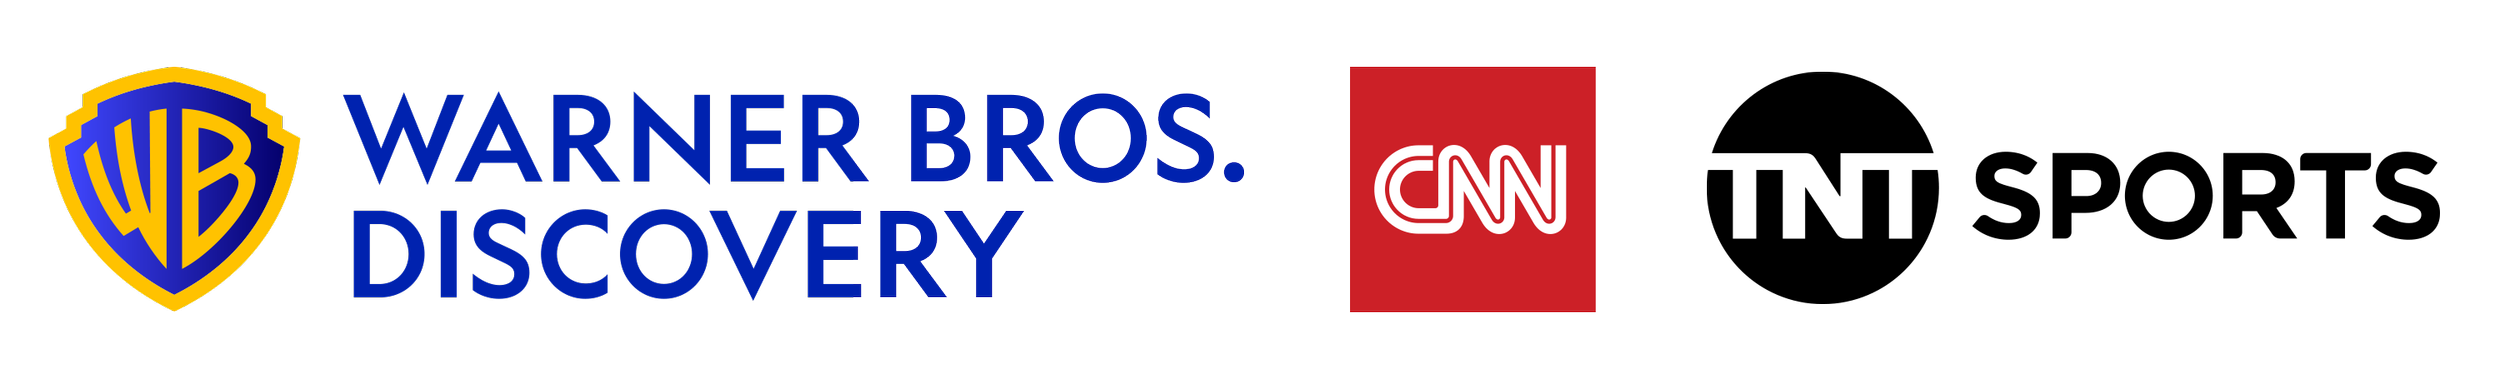 CNN-WBD-TNTsports Logo (1).png